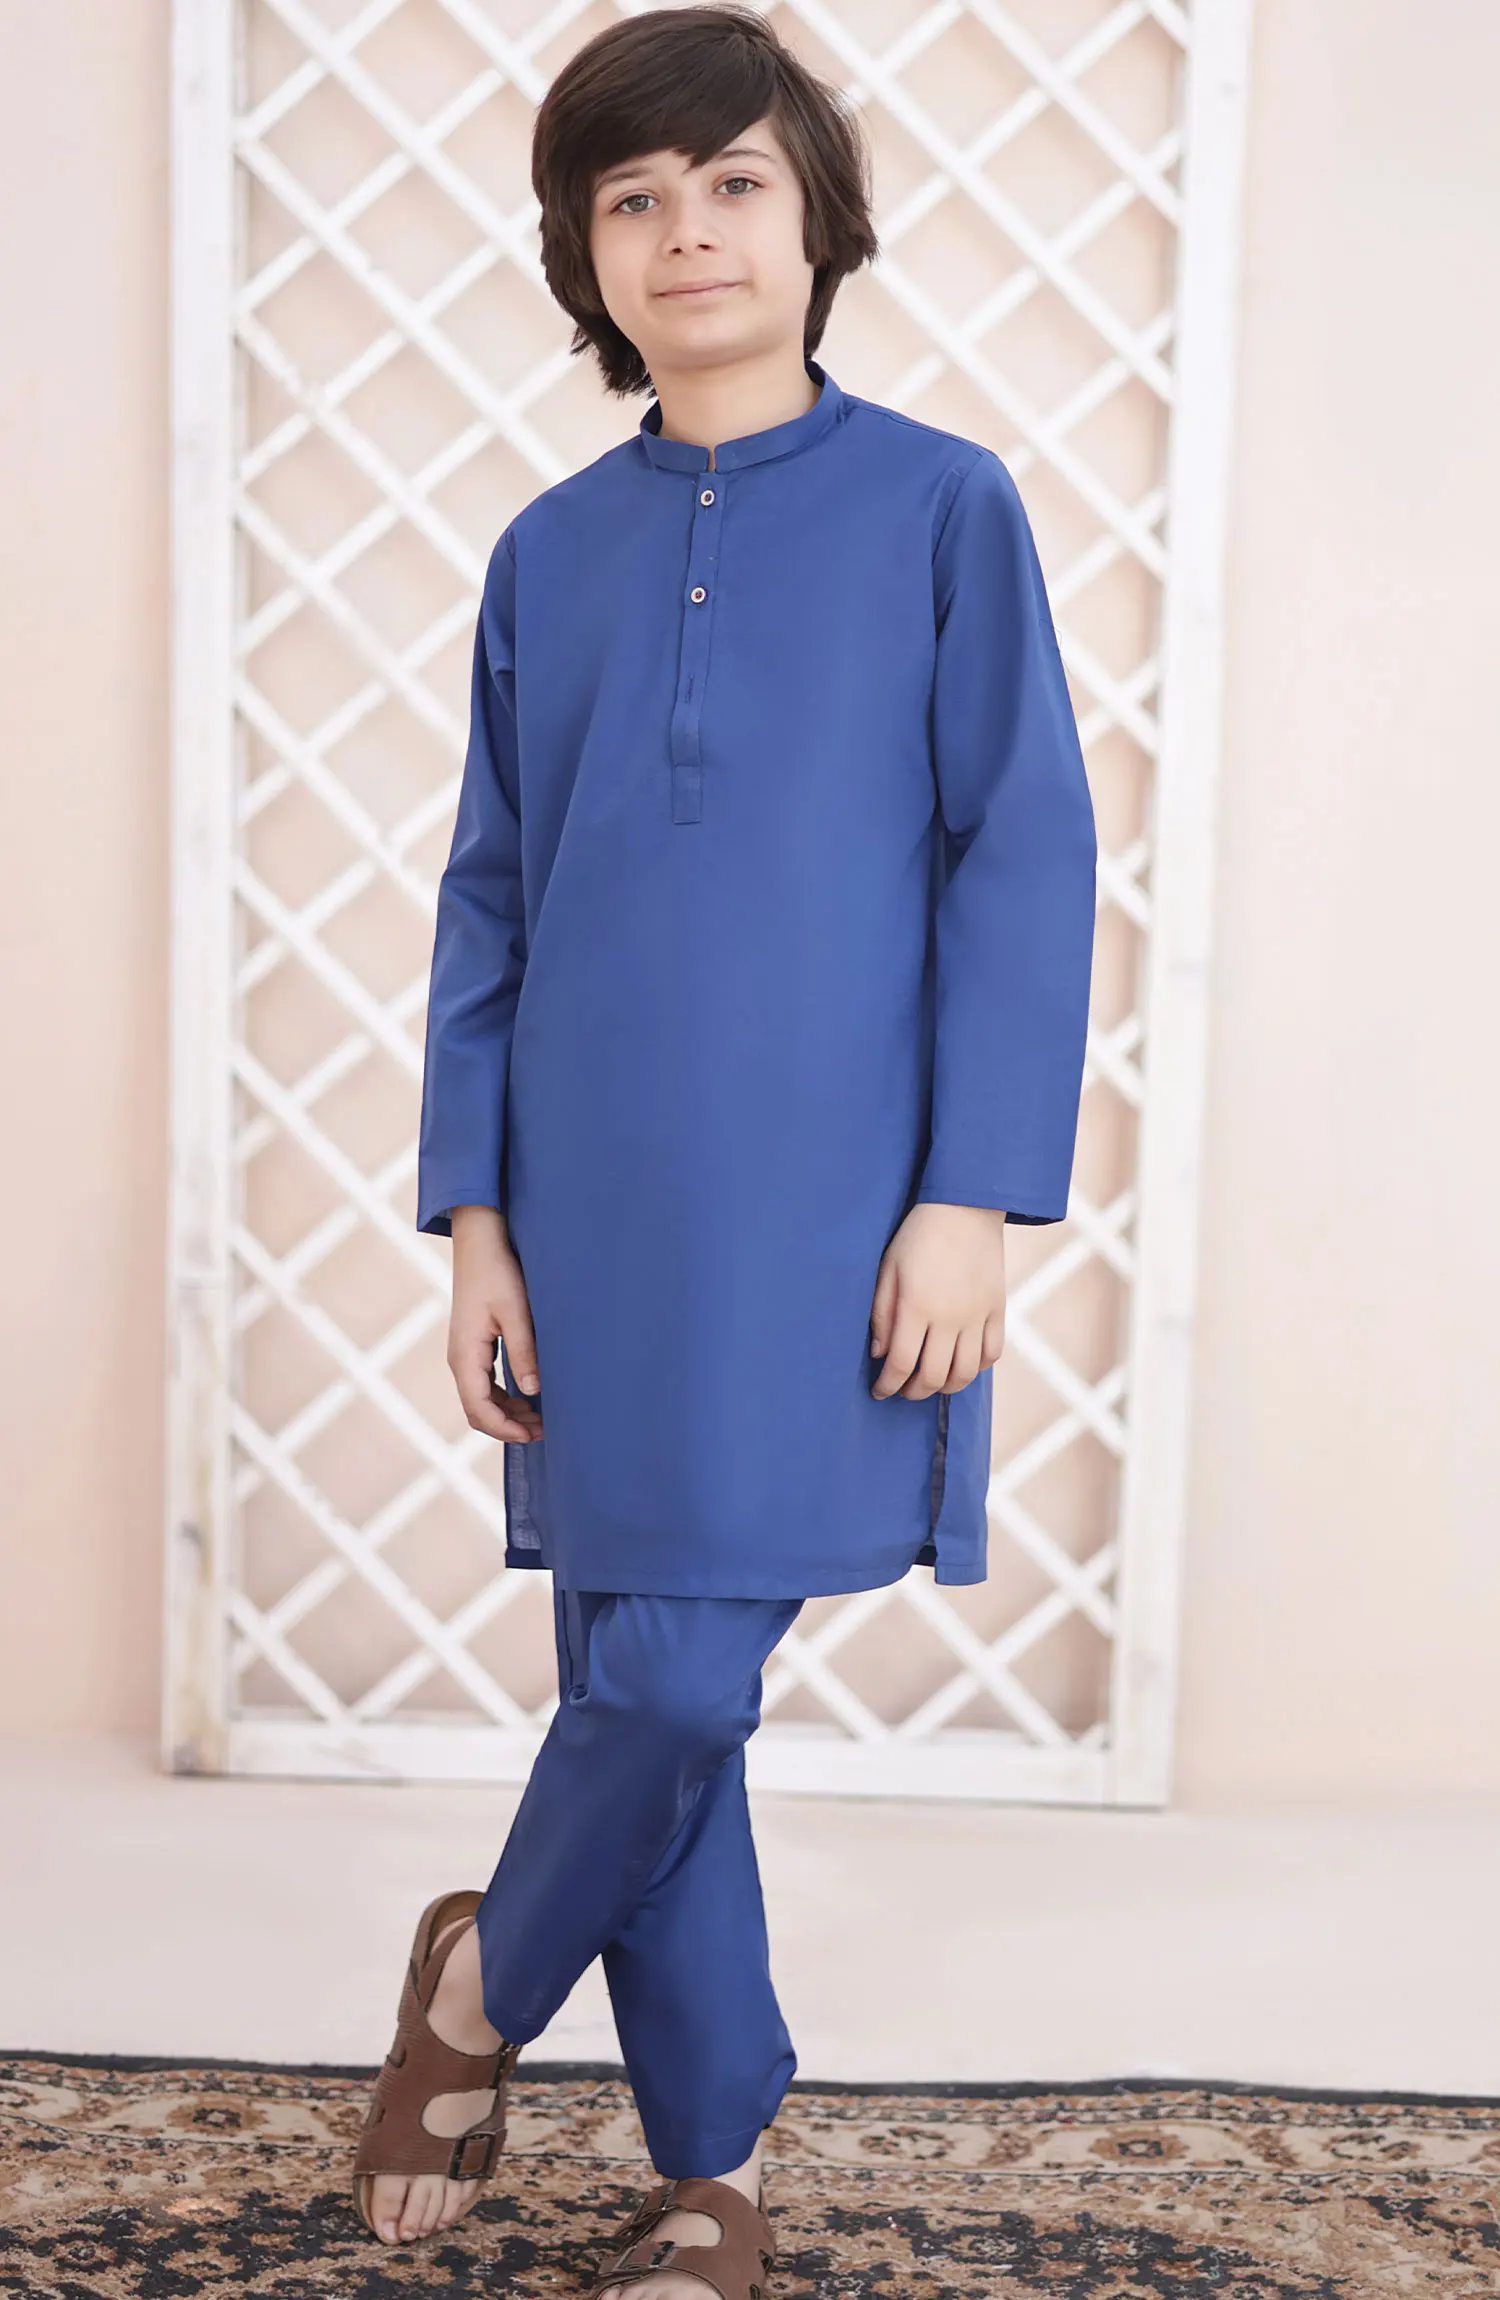 Ramazan Edit Kurta Trouser Collection By Hassan Jee - KT 24 Ocean Blue Kurta Trouser